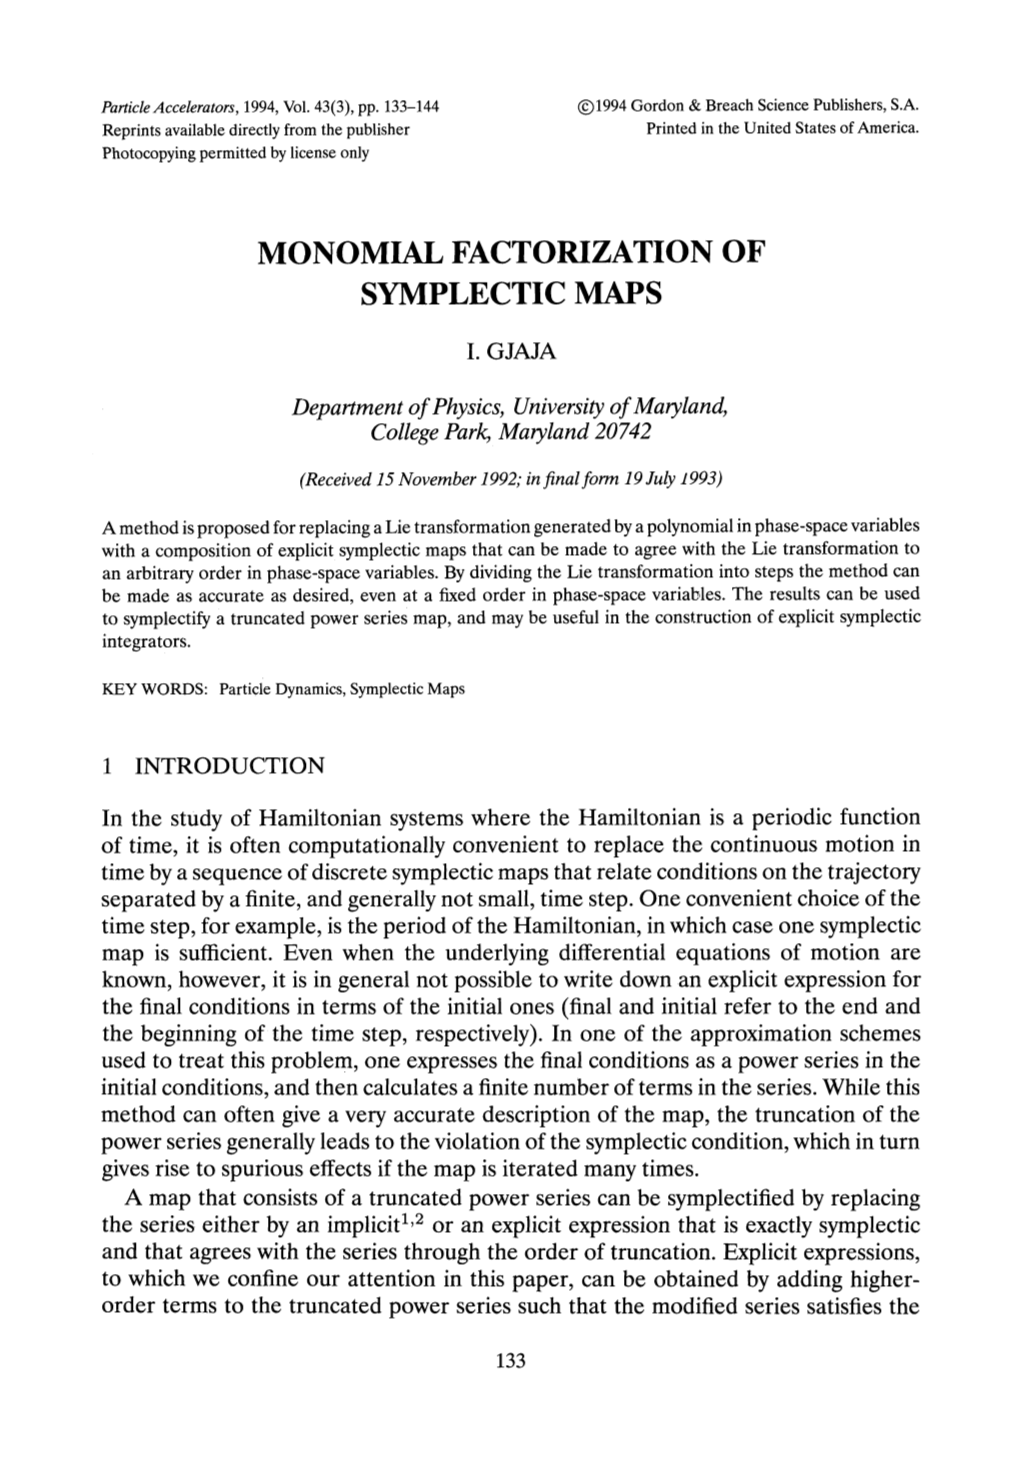 Monomial Factorization of Symplectic Maps